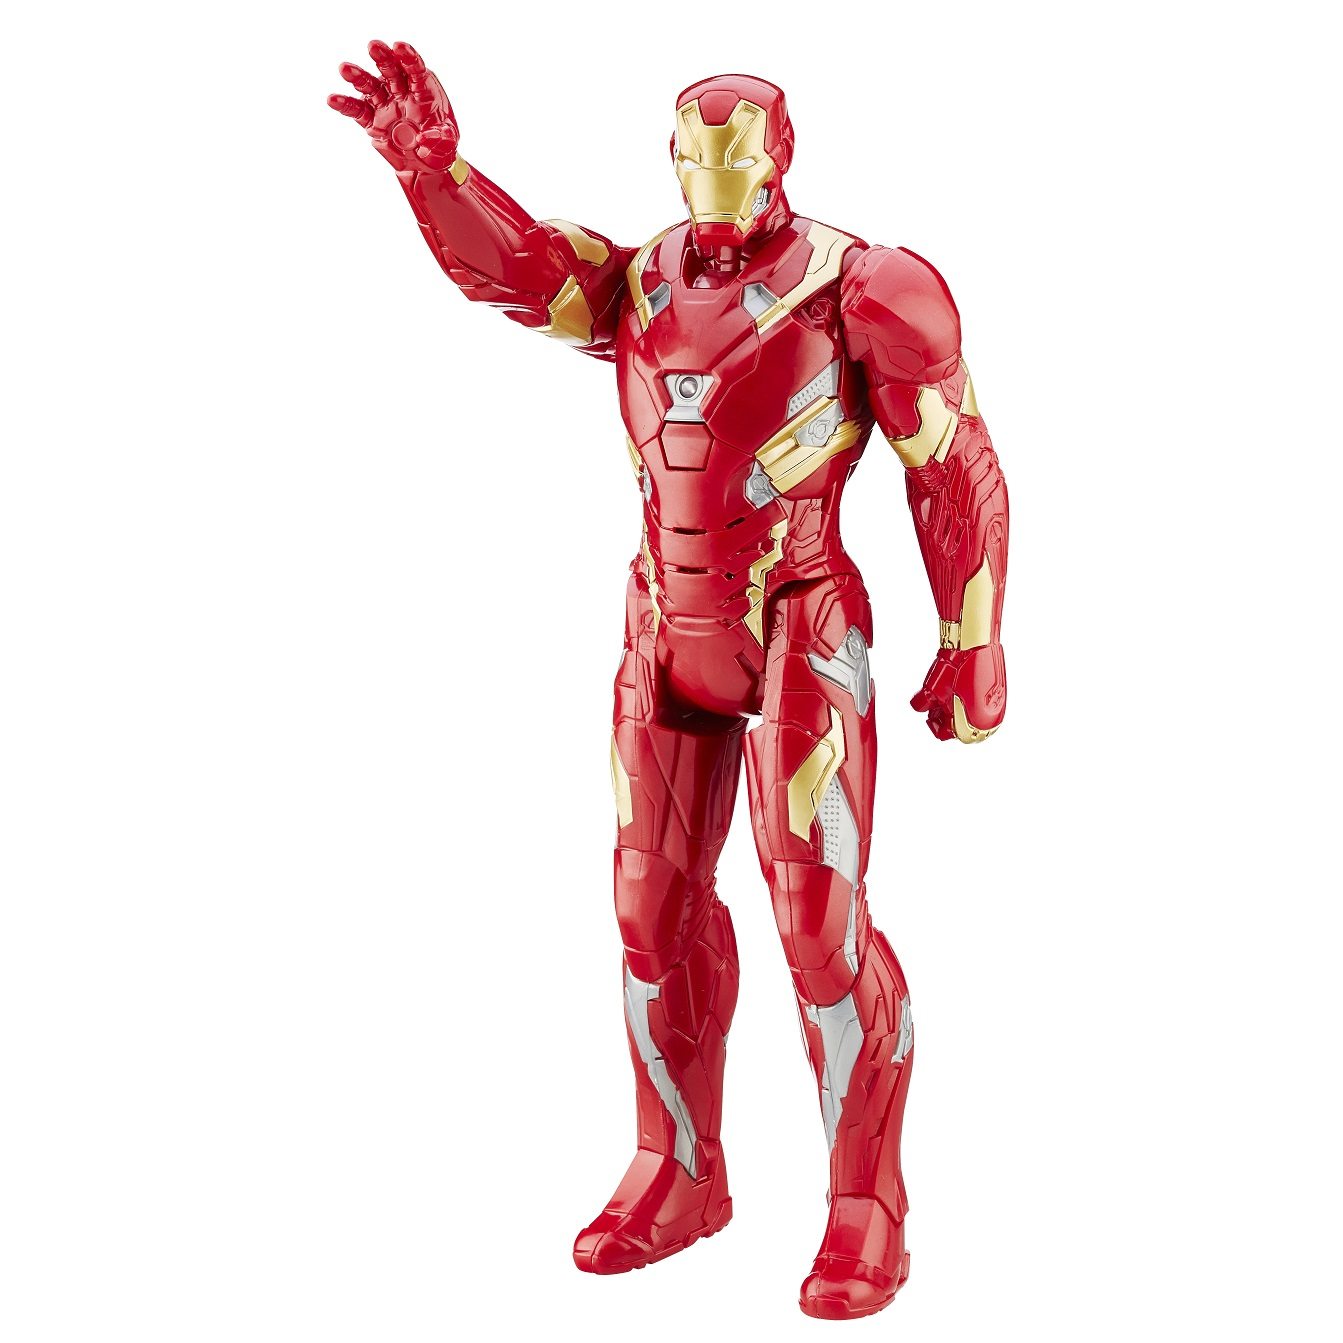 Marvel’s “Captain America: Civil War” Titan Hero Electronic Figures 